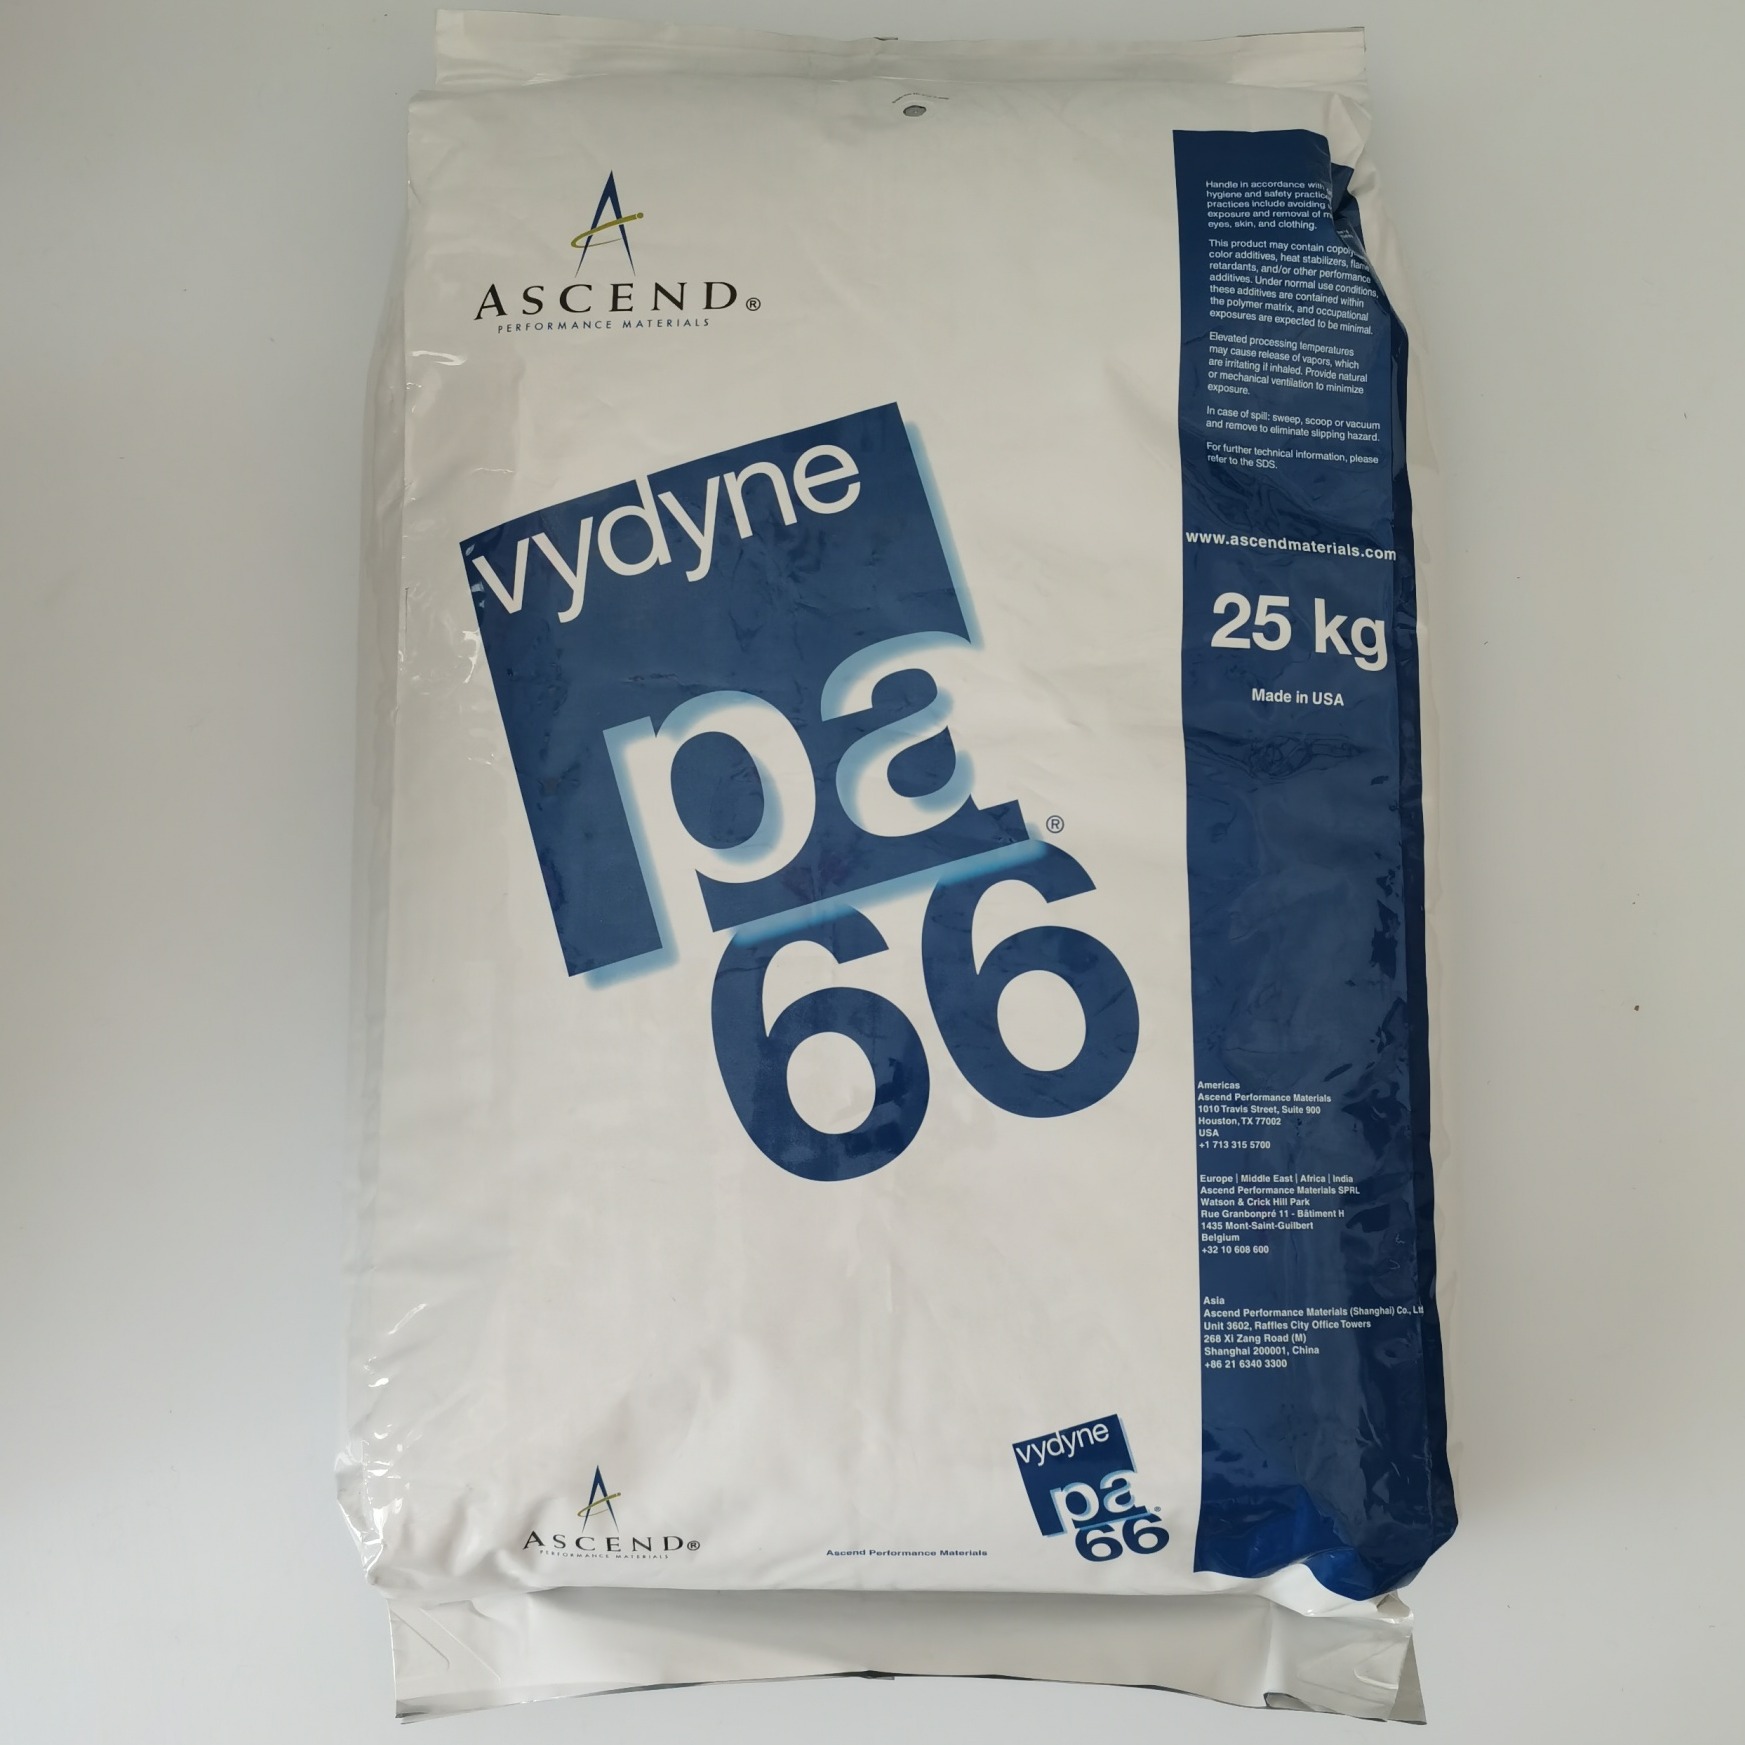 PA66 美国首诺 Vydyne 21Z 抗化学性 低粘度 耐油性好 通用级尼龙66